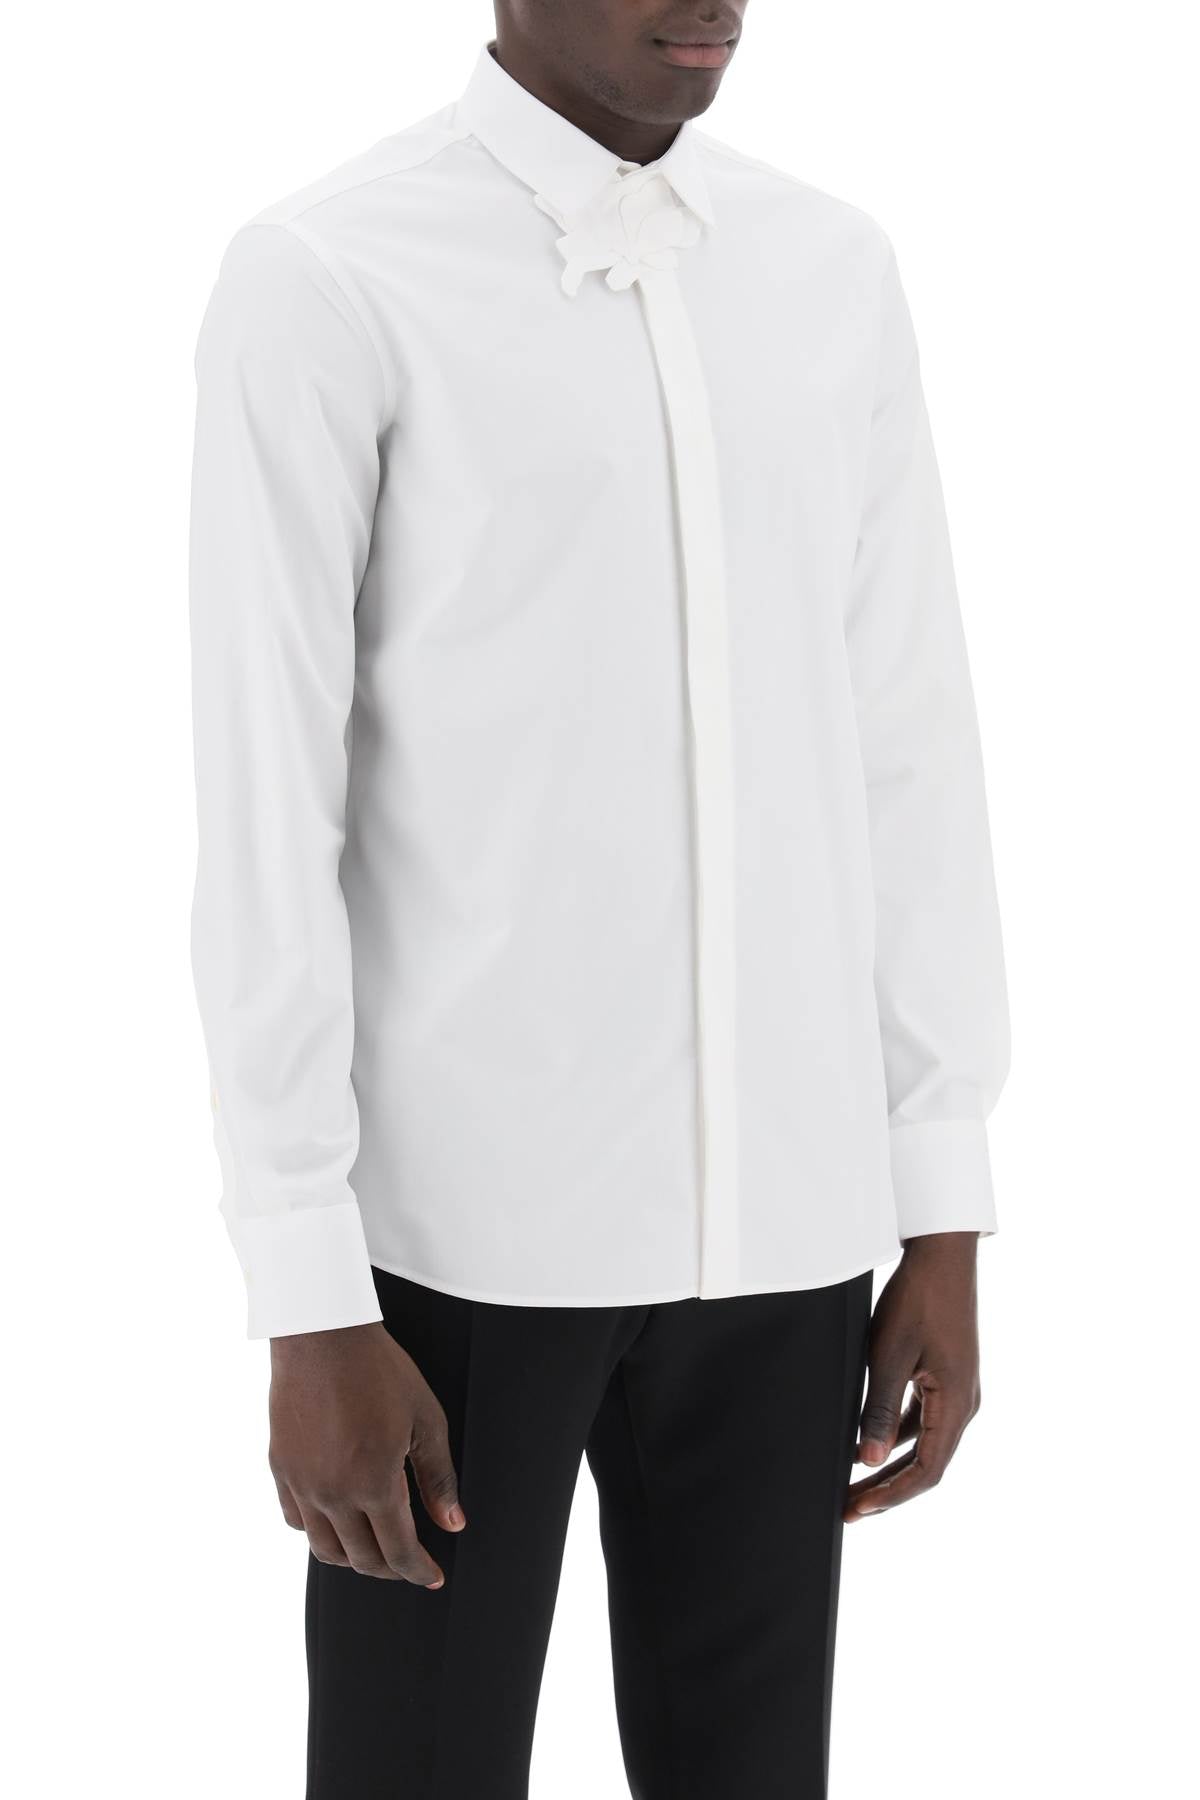 VALENTINO GARAVANI White Cotton Poplin Long-Sleeved Shirt with Embroidered Flower Detail